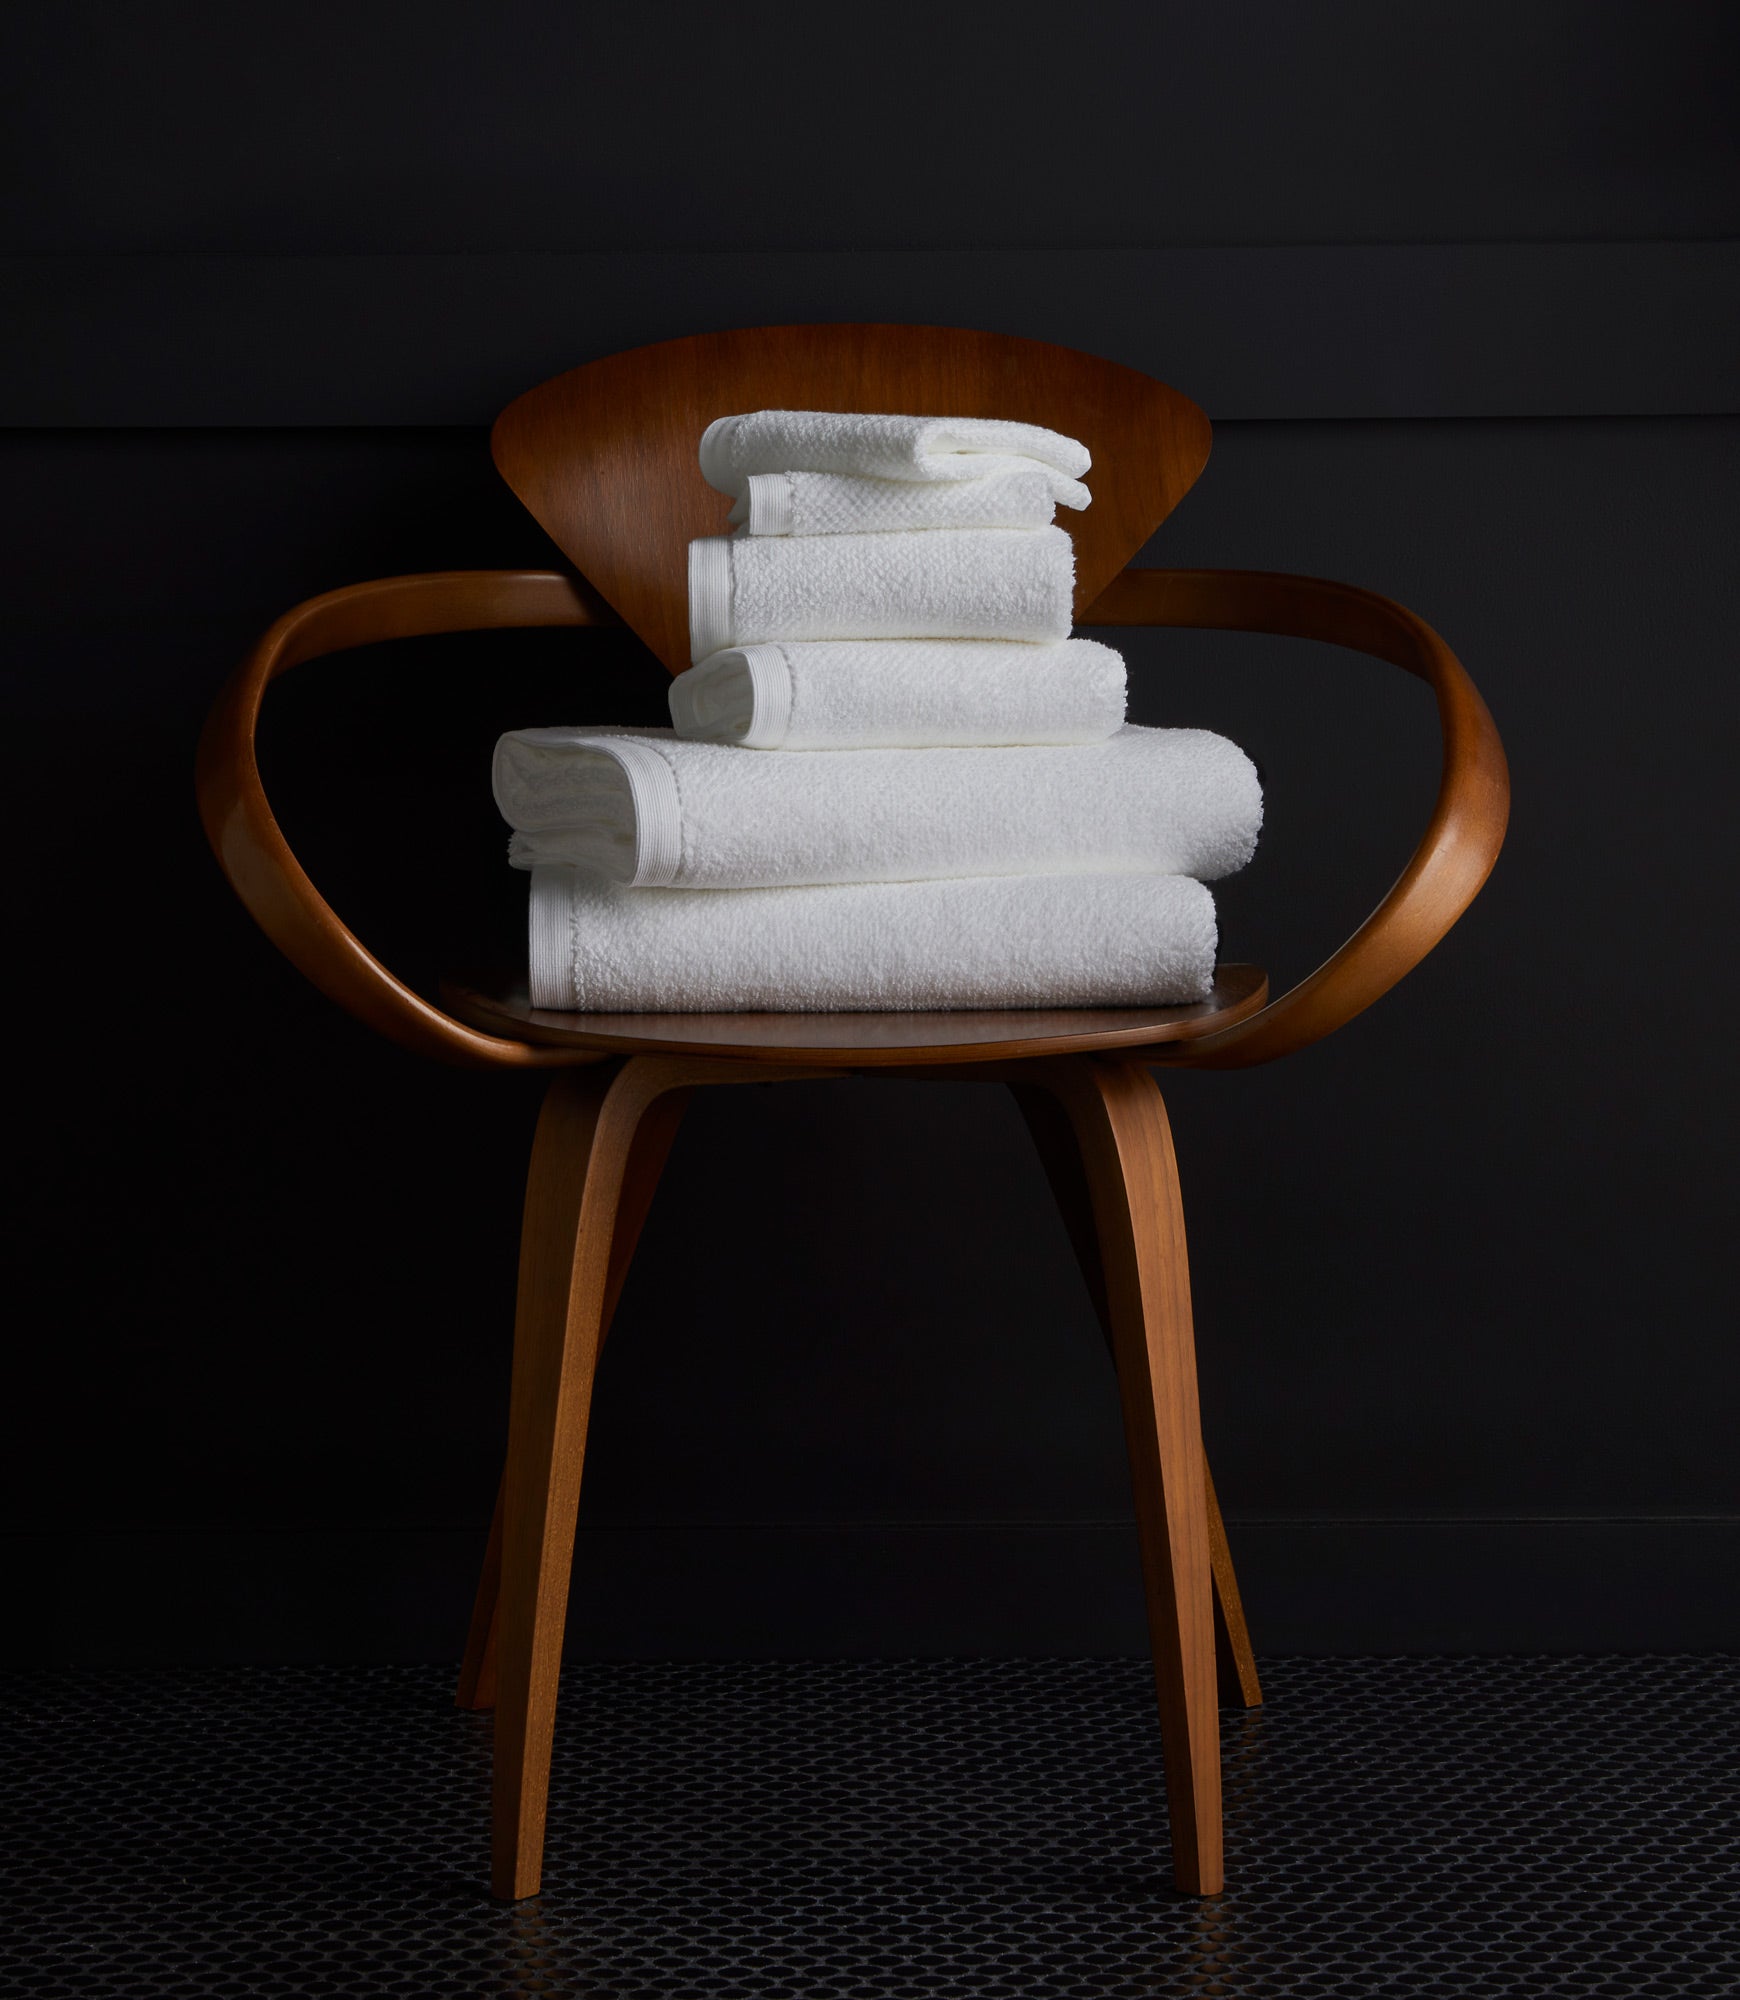 Jubilee Bath Towel Collection - Luxury Bath Linens